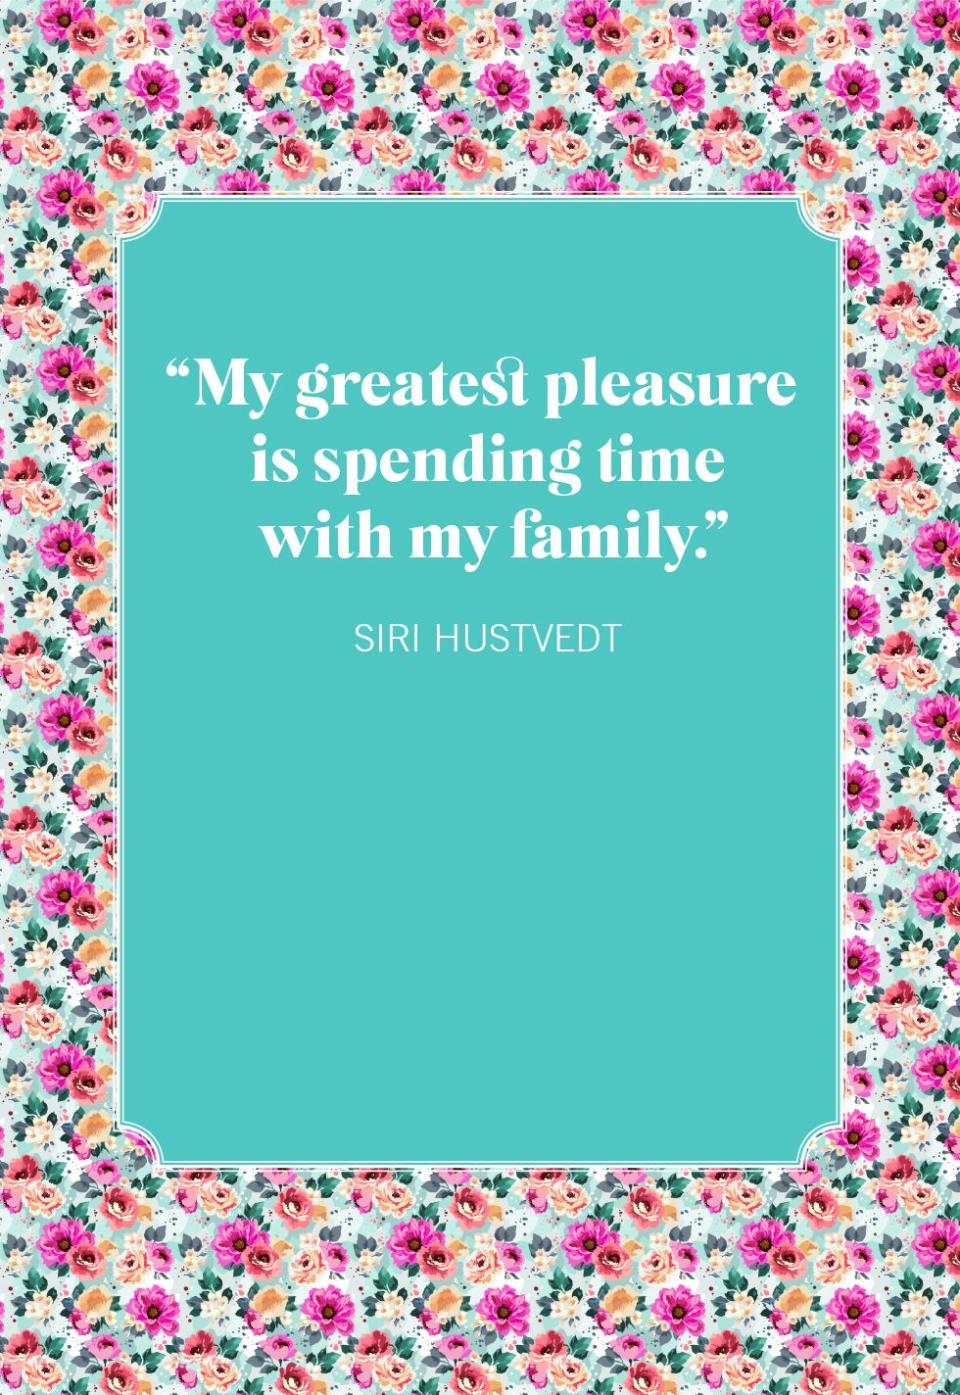 siri hustvedt family quotes